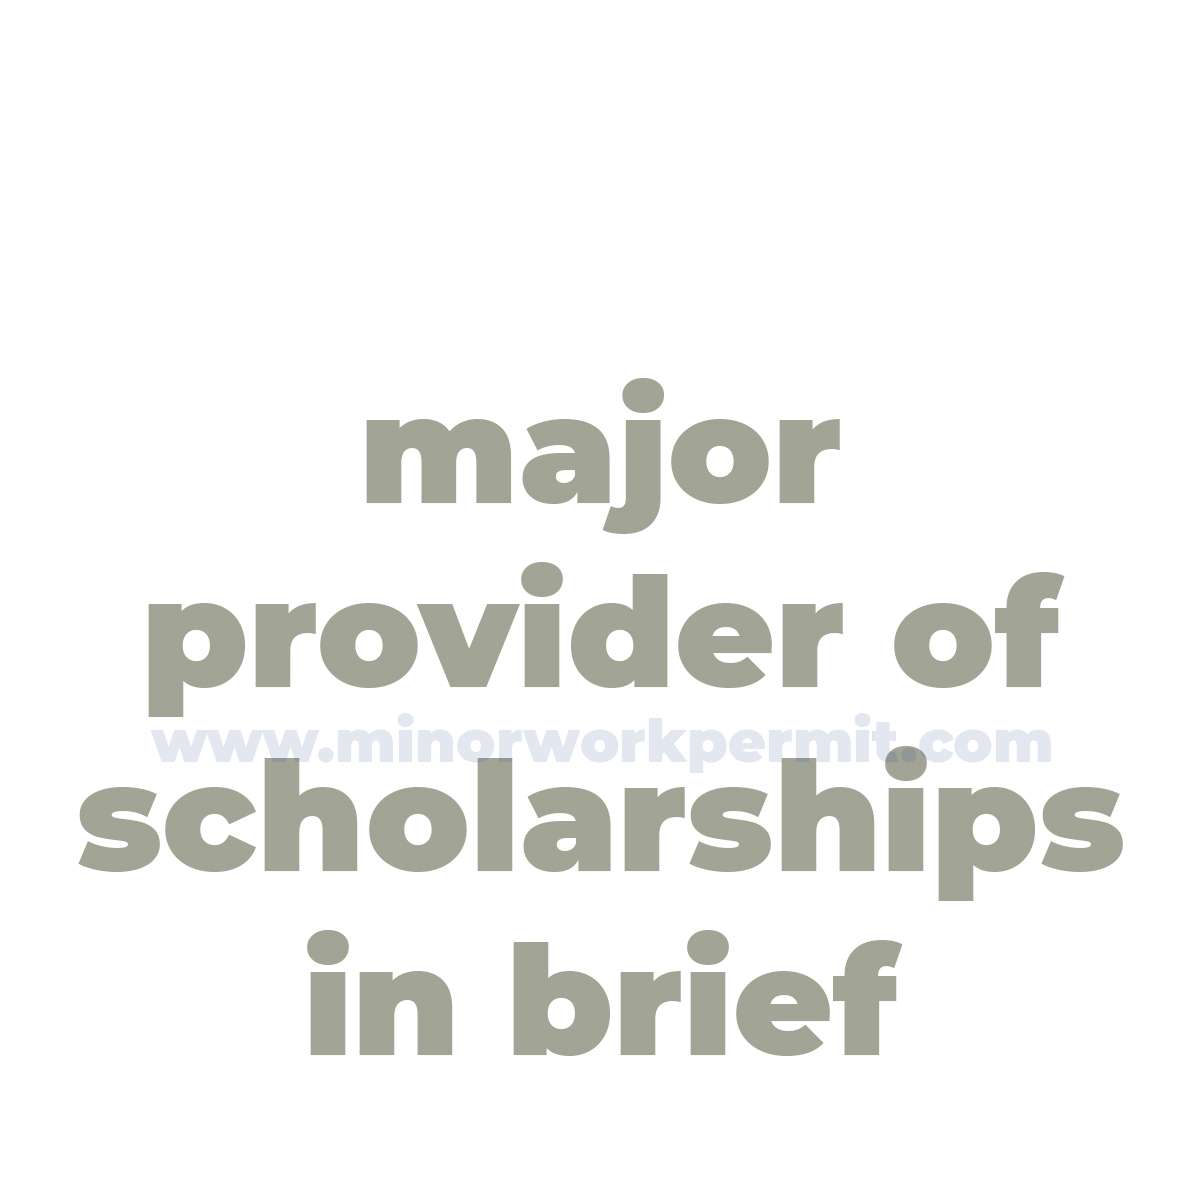 Major Provider of Scholarships in Brief